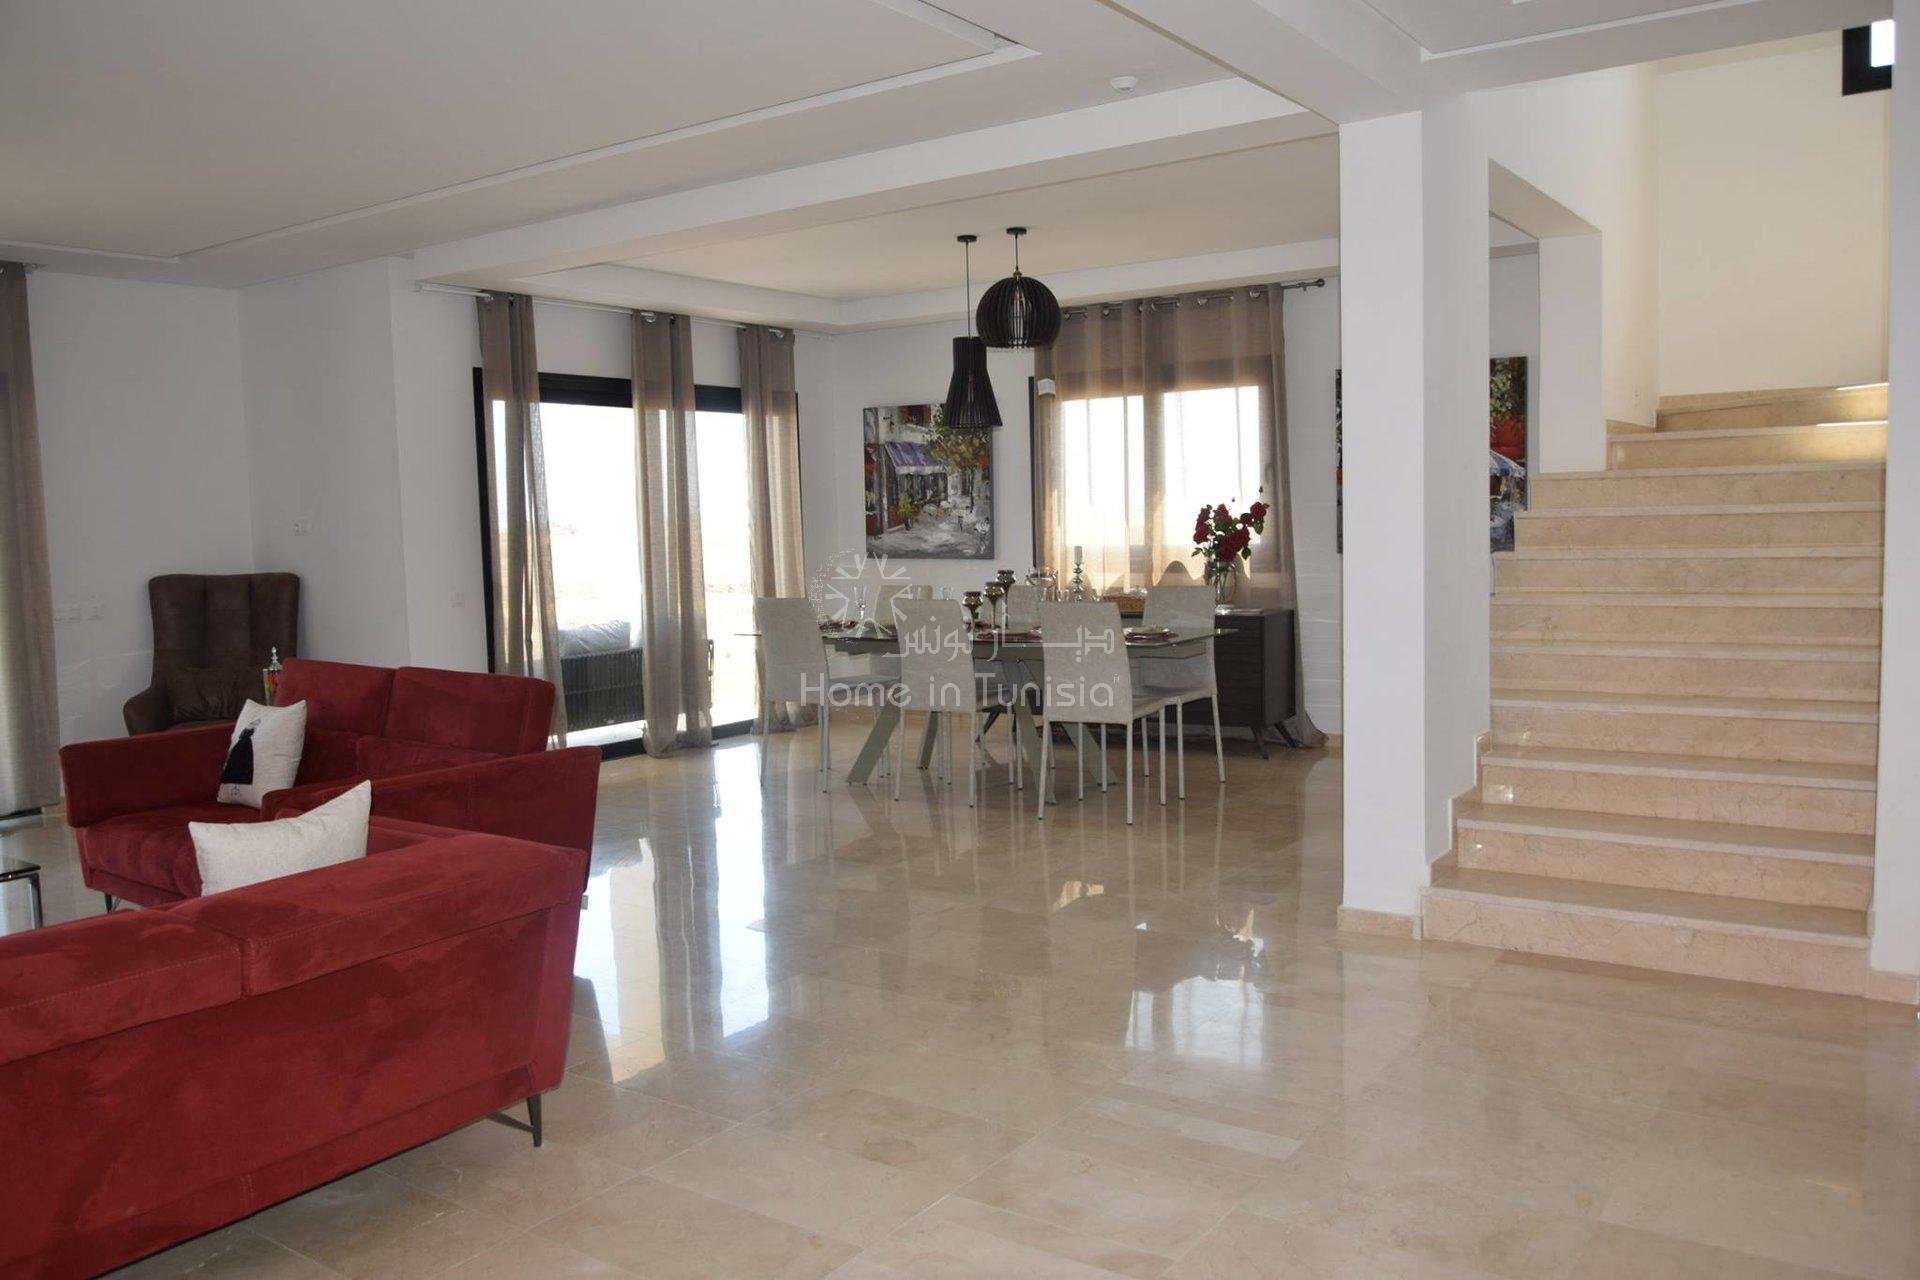 Tunis Bay résidentiel golf villa Oceanos jumelée 3 chambres terrasse jardin piscine privee